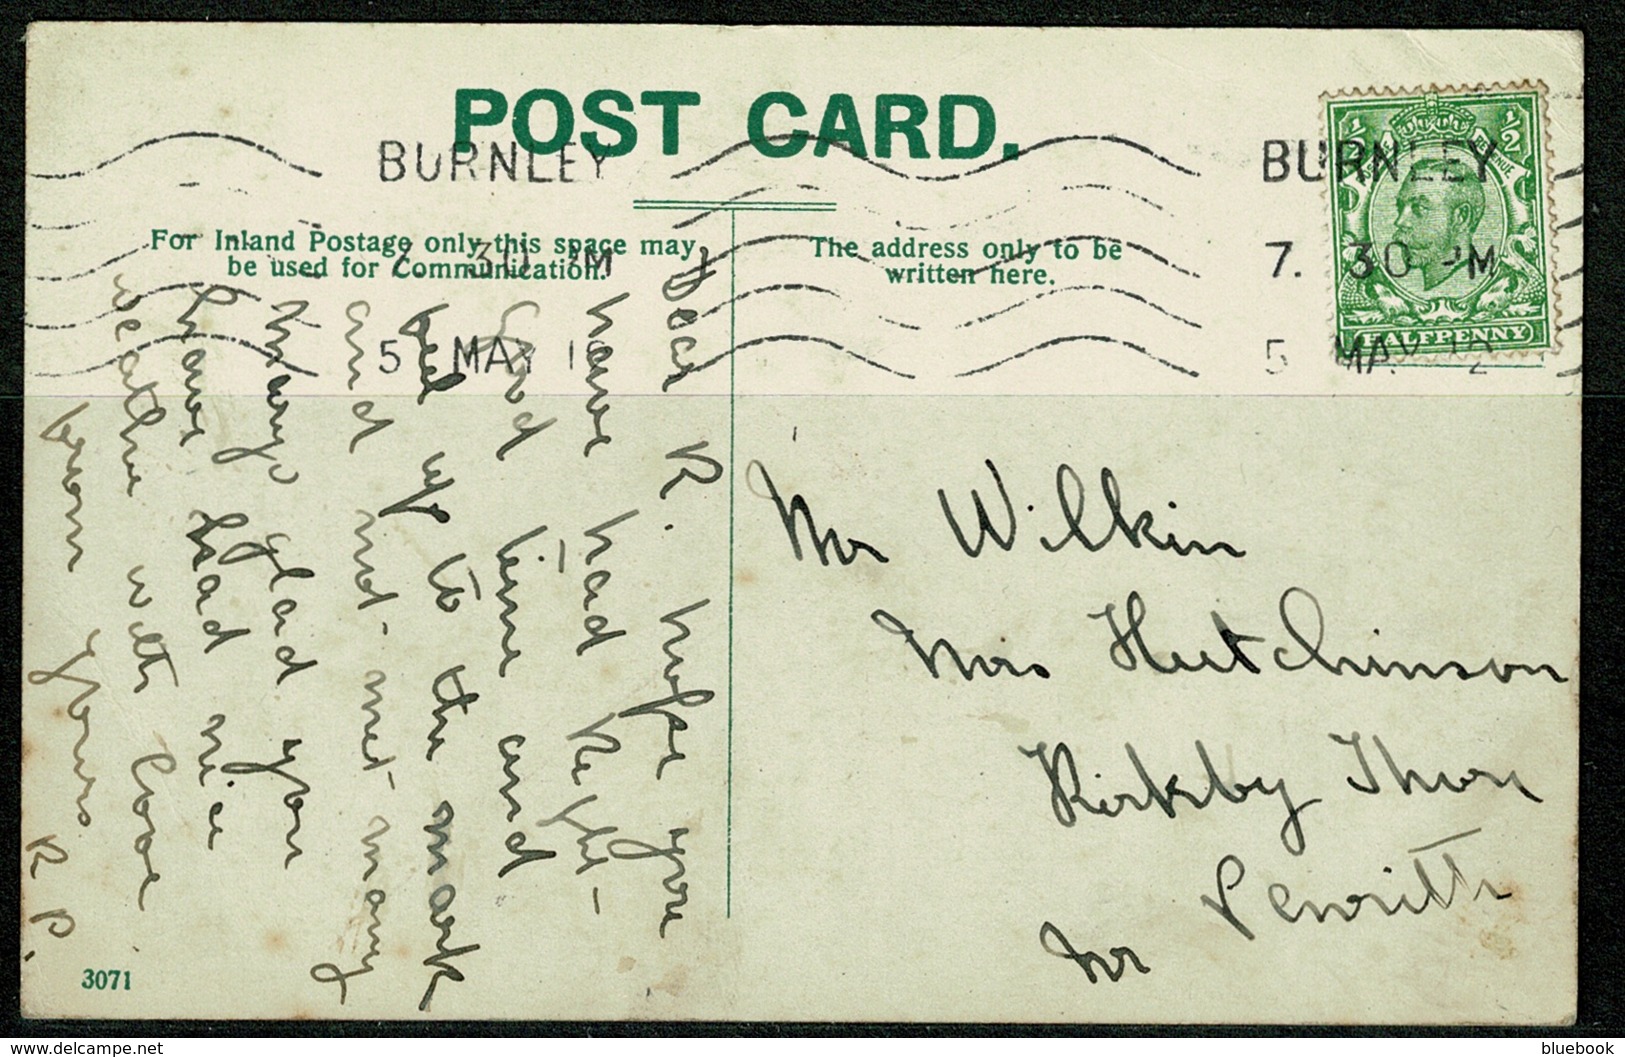 Ref 1230 - 1912 Comicus Comic Postcard - Bonnie Mary Of Argyle - Burnley Krag Postmark - Bandes Dessinées